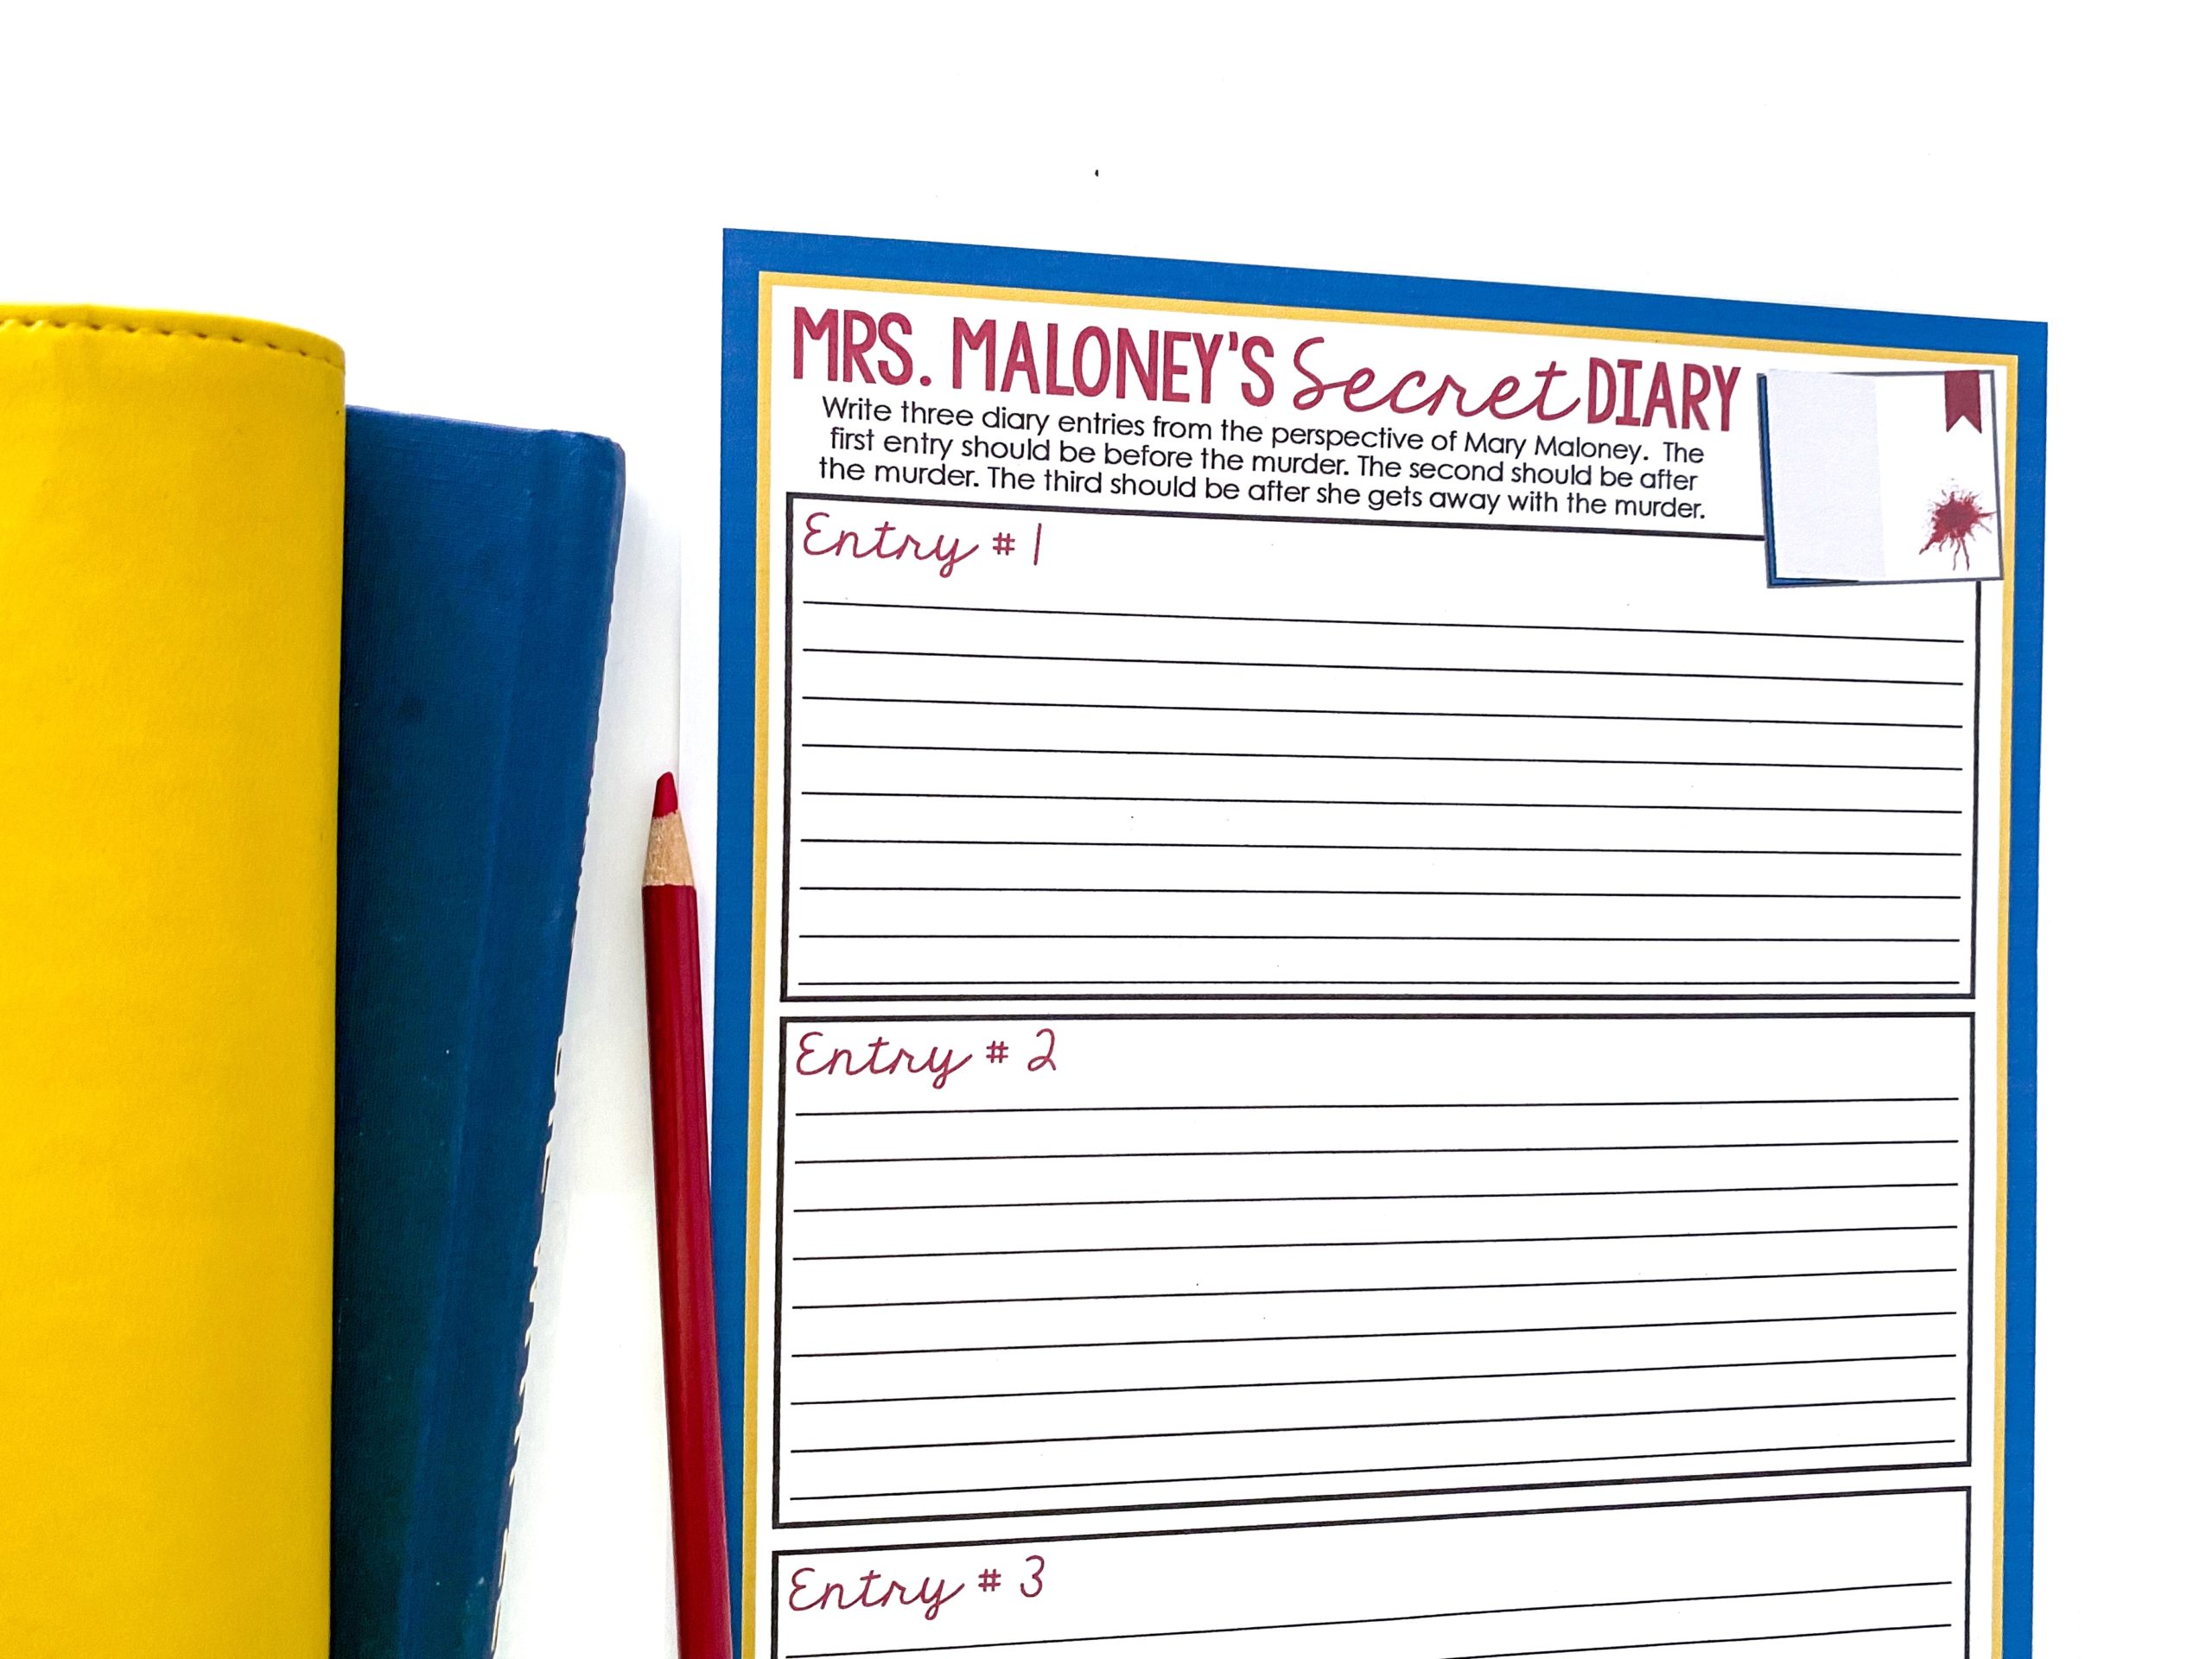 Mrs. Maloney's secret diary activity